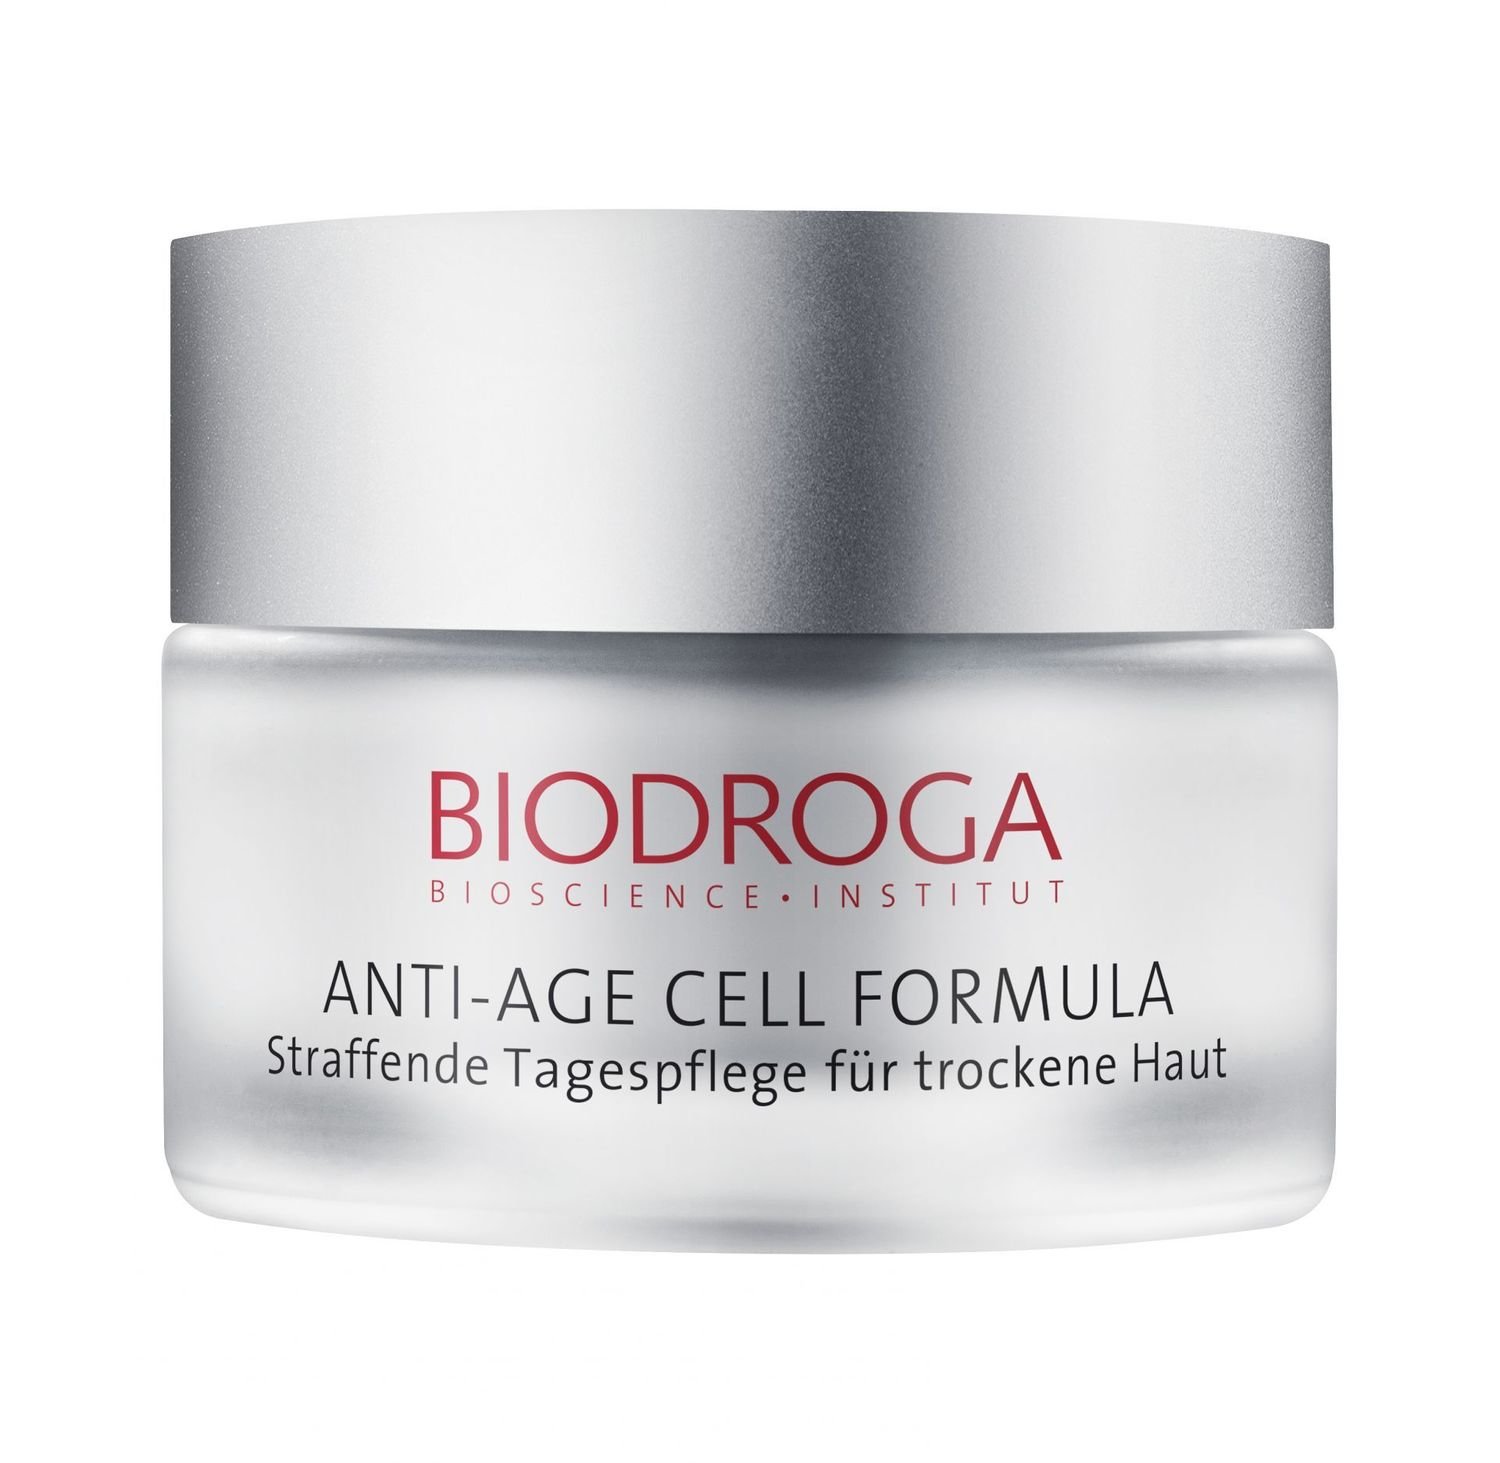 Biodroga Anti-Age Cell Formula Firming Dry Skin